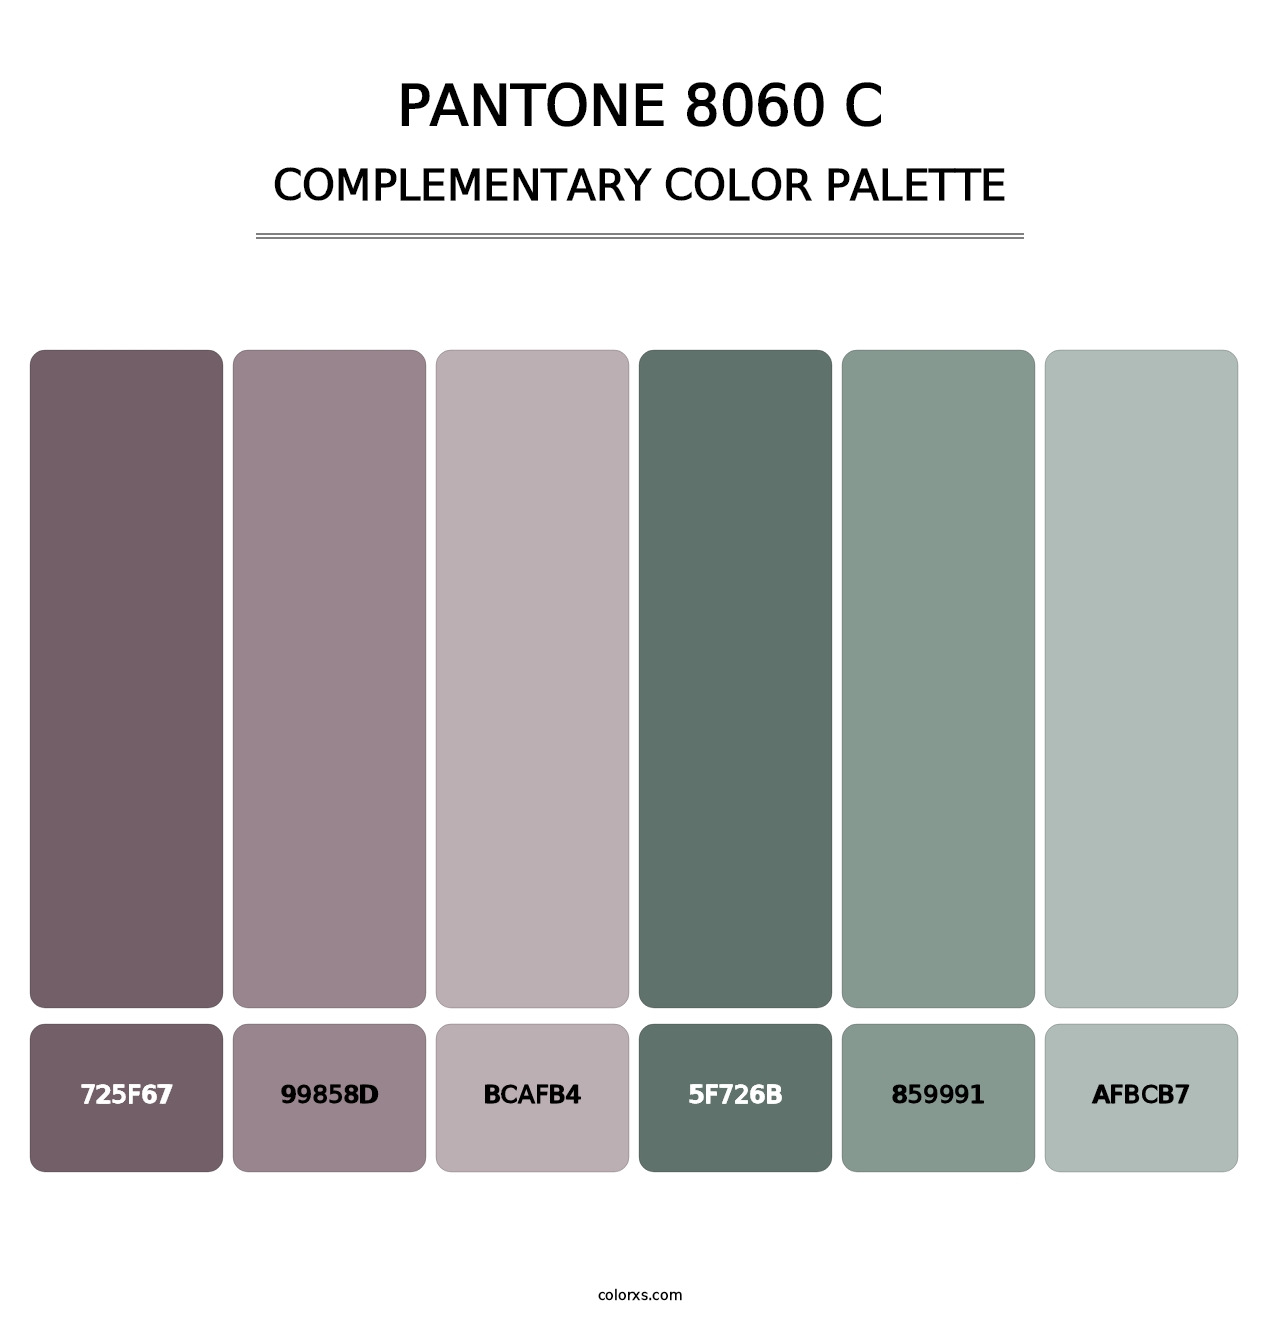 PANTONE 8060 C - Complementary Color Palette